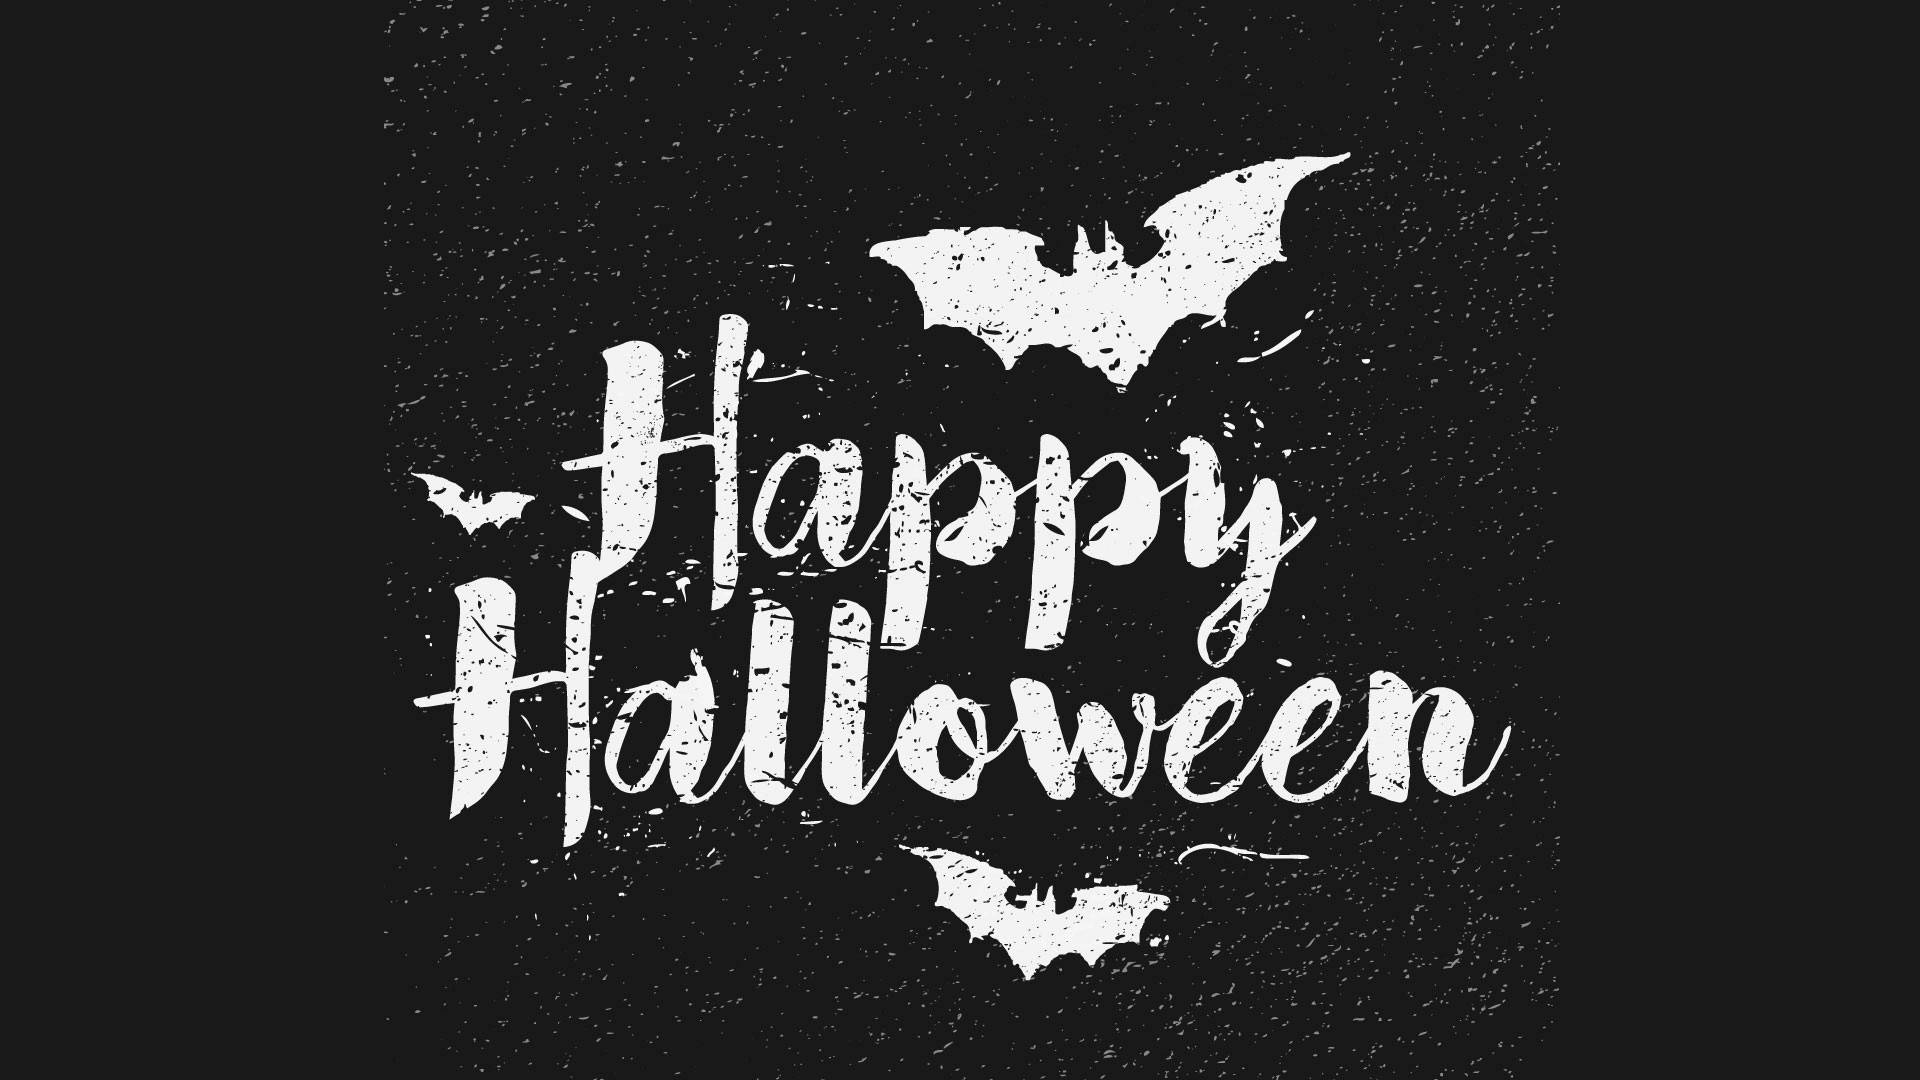 Enjoy a spooky Halloween night! Wallpaper